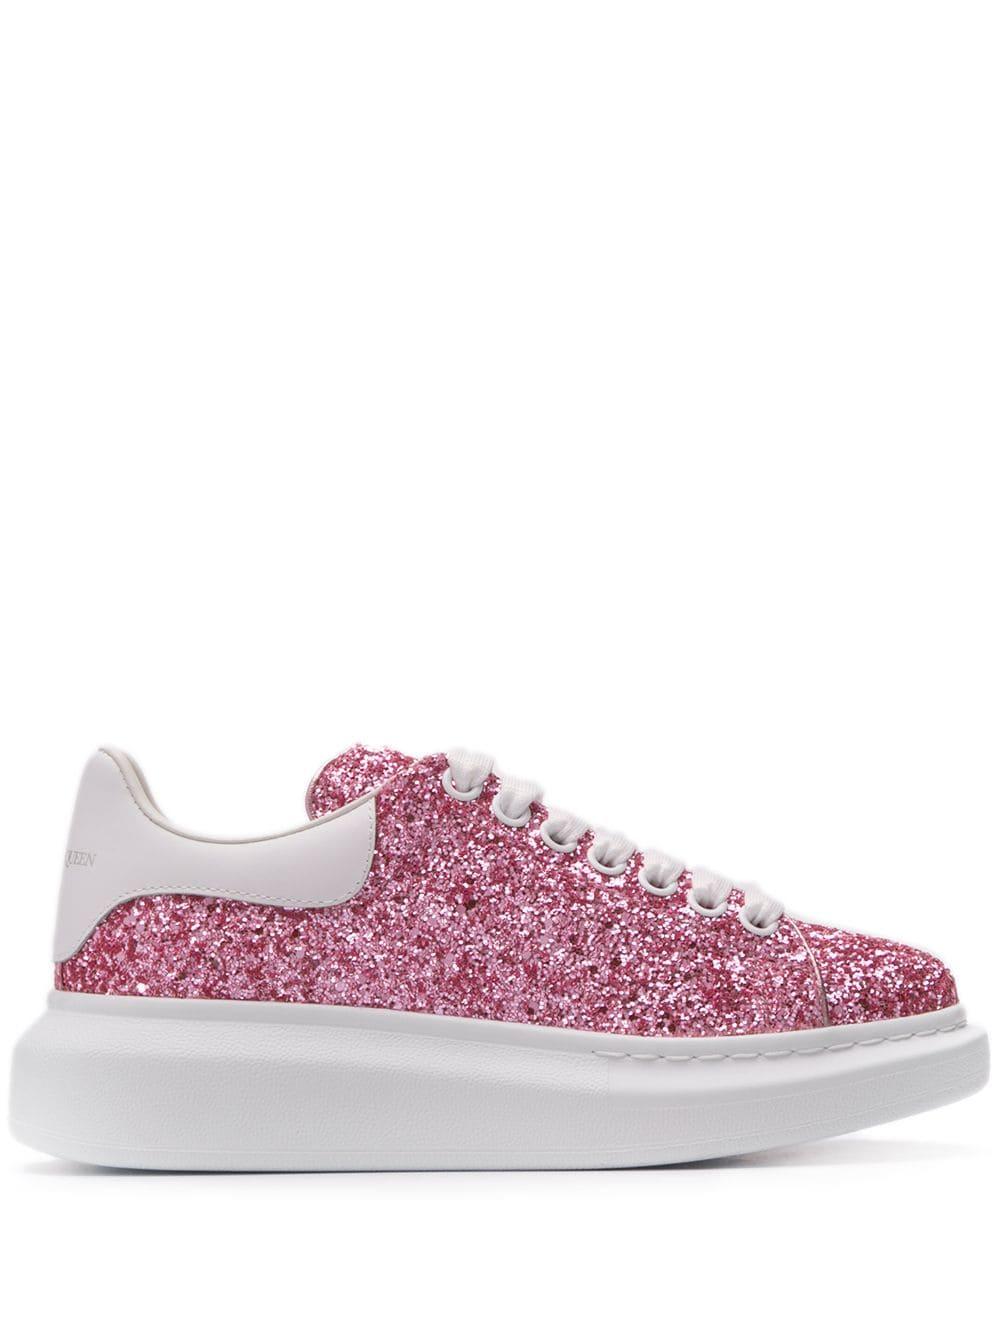 Alexander McQueen Oversized Glitter Sneakers in Pink - Save 16% - Lyst